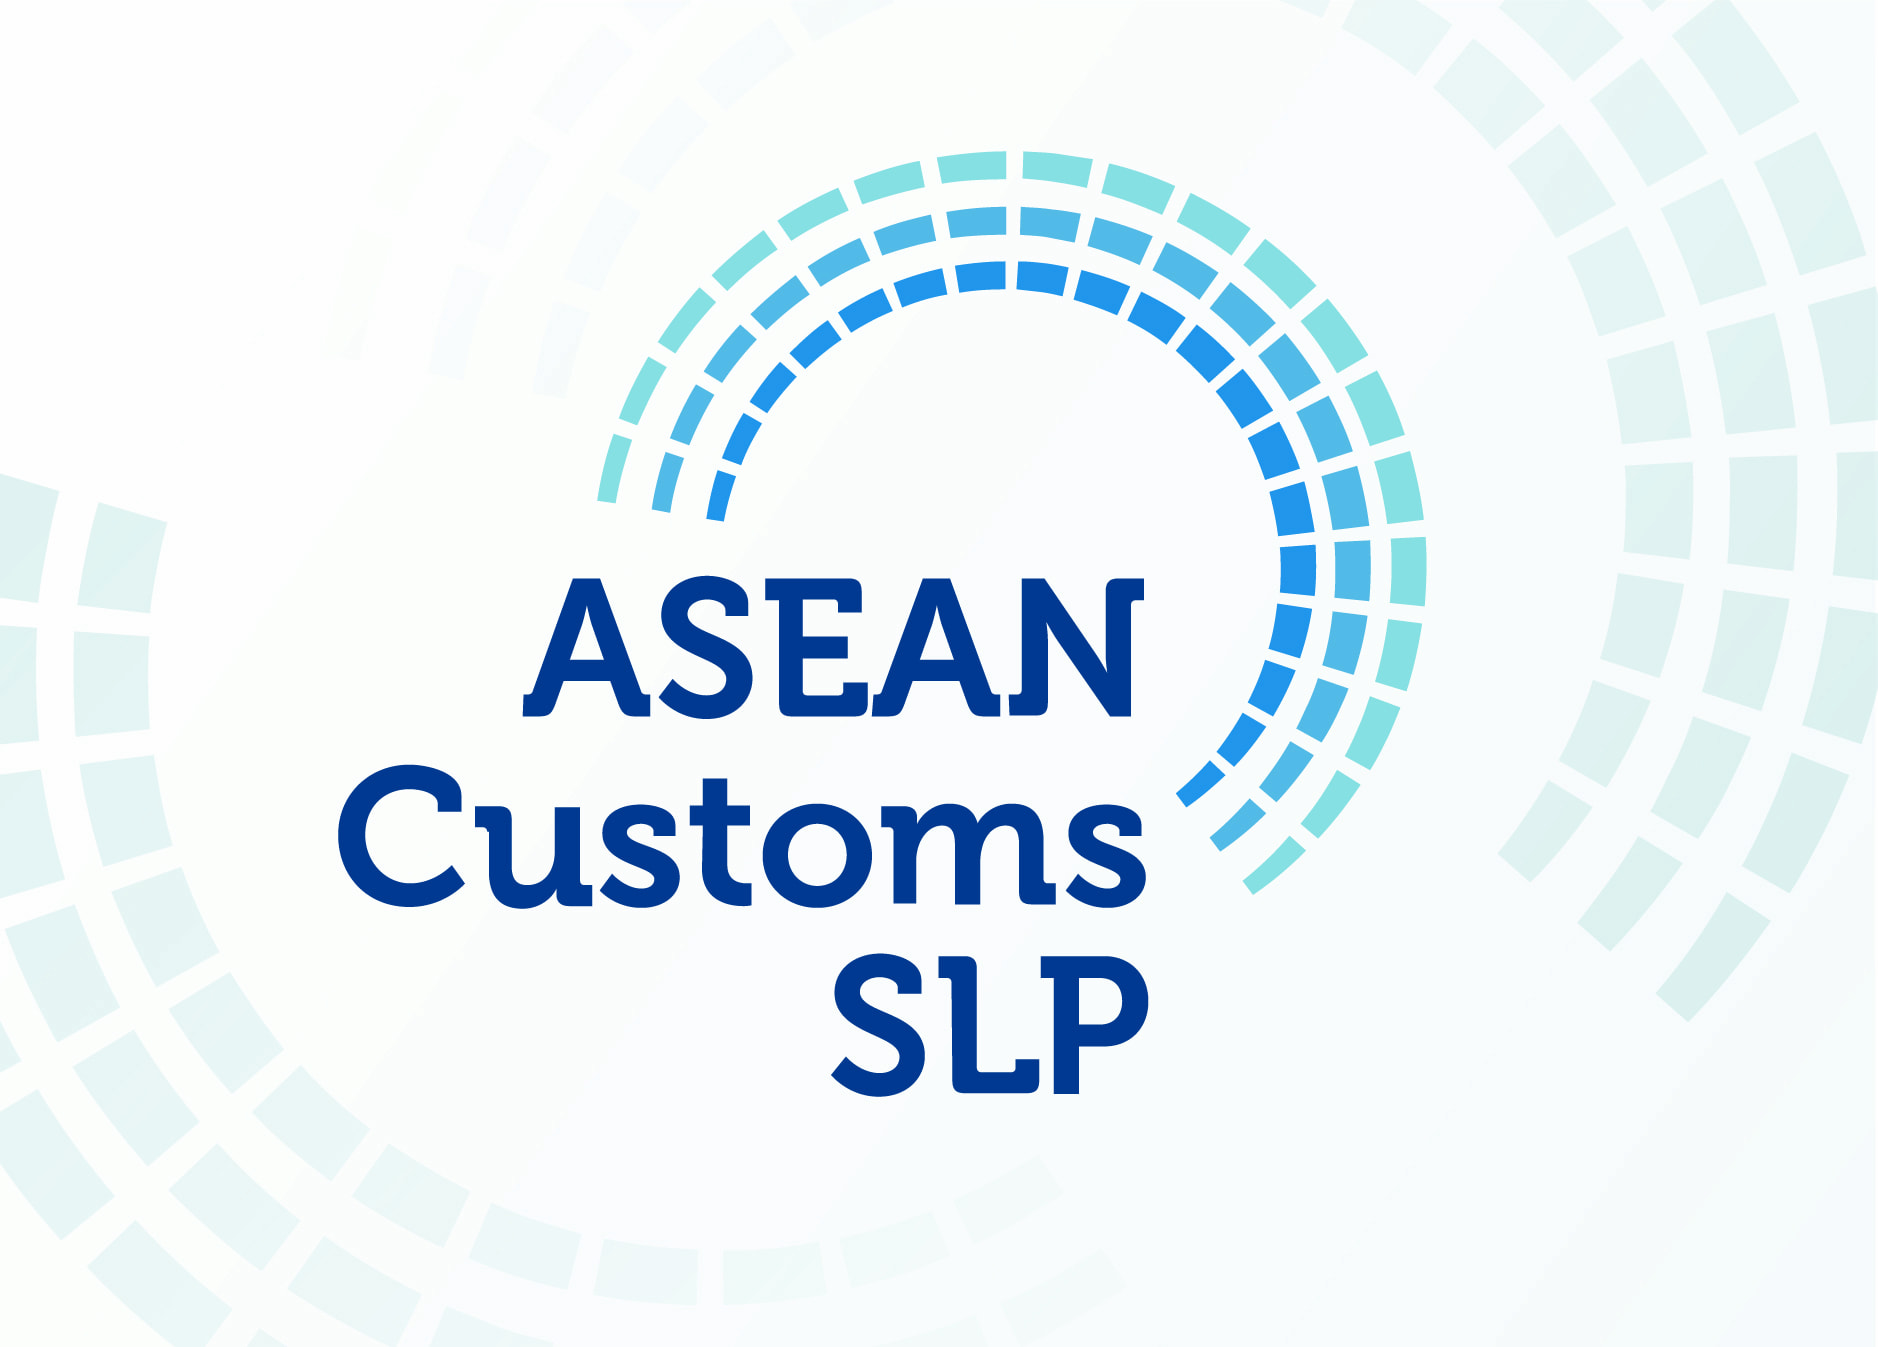 asean-customs-slp-logo.jpg